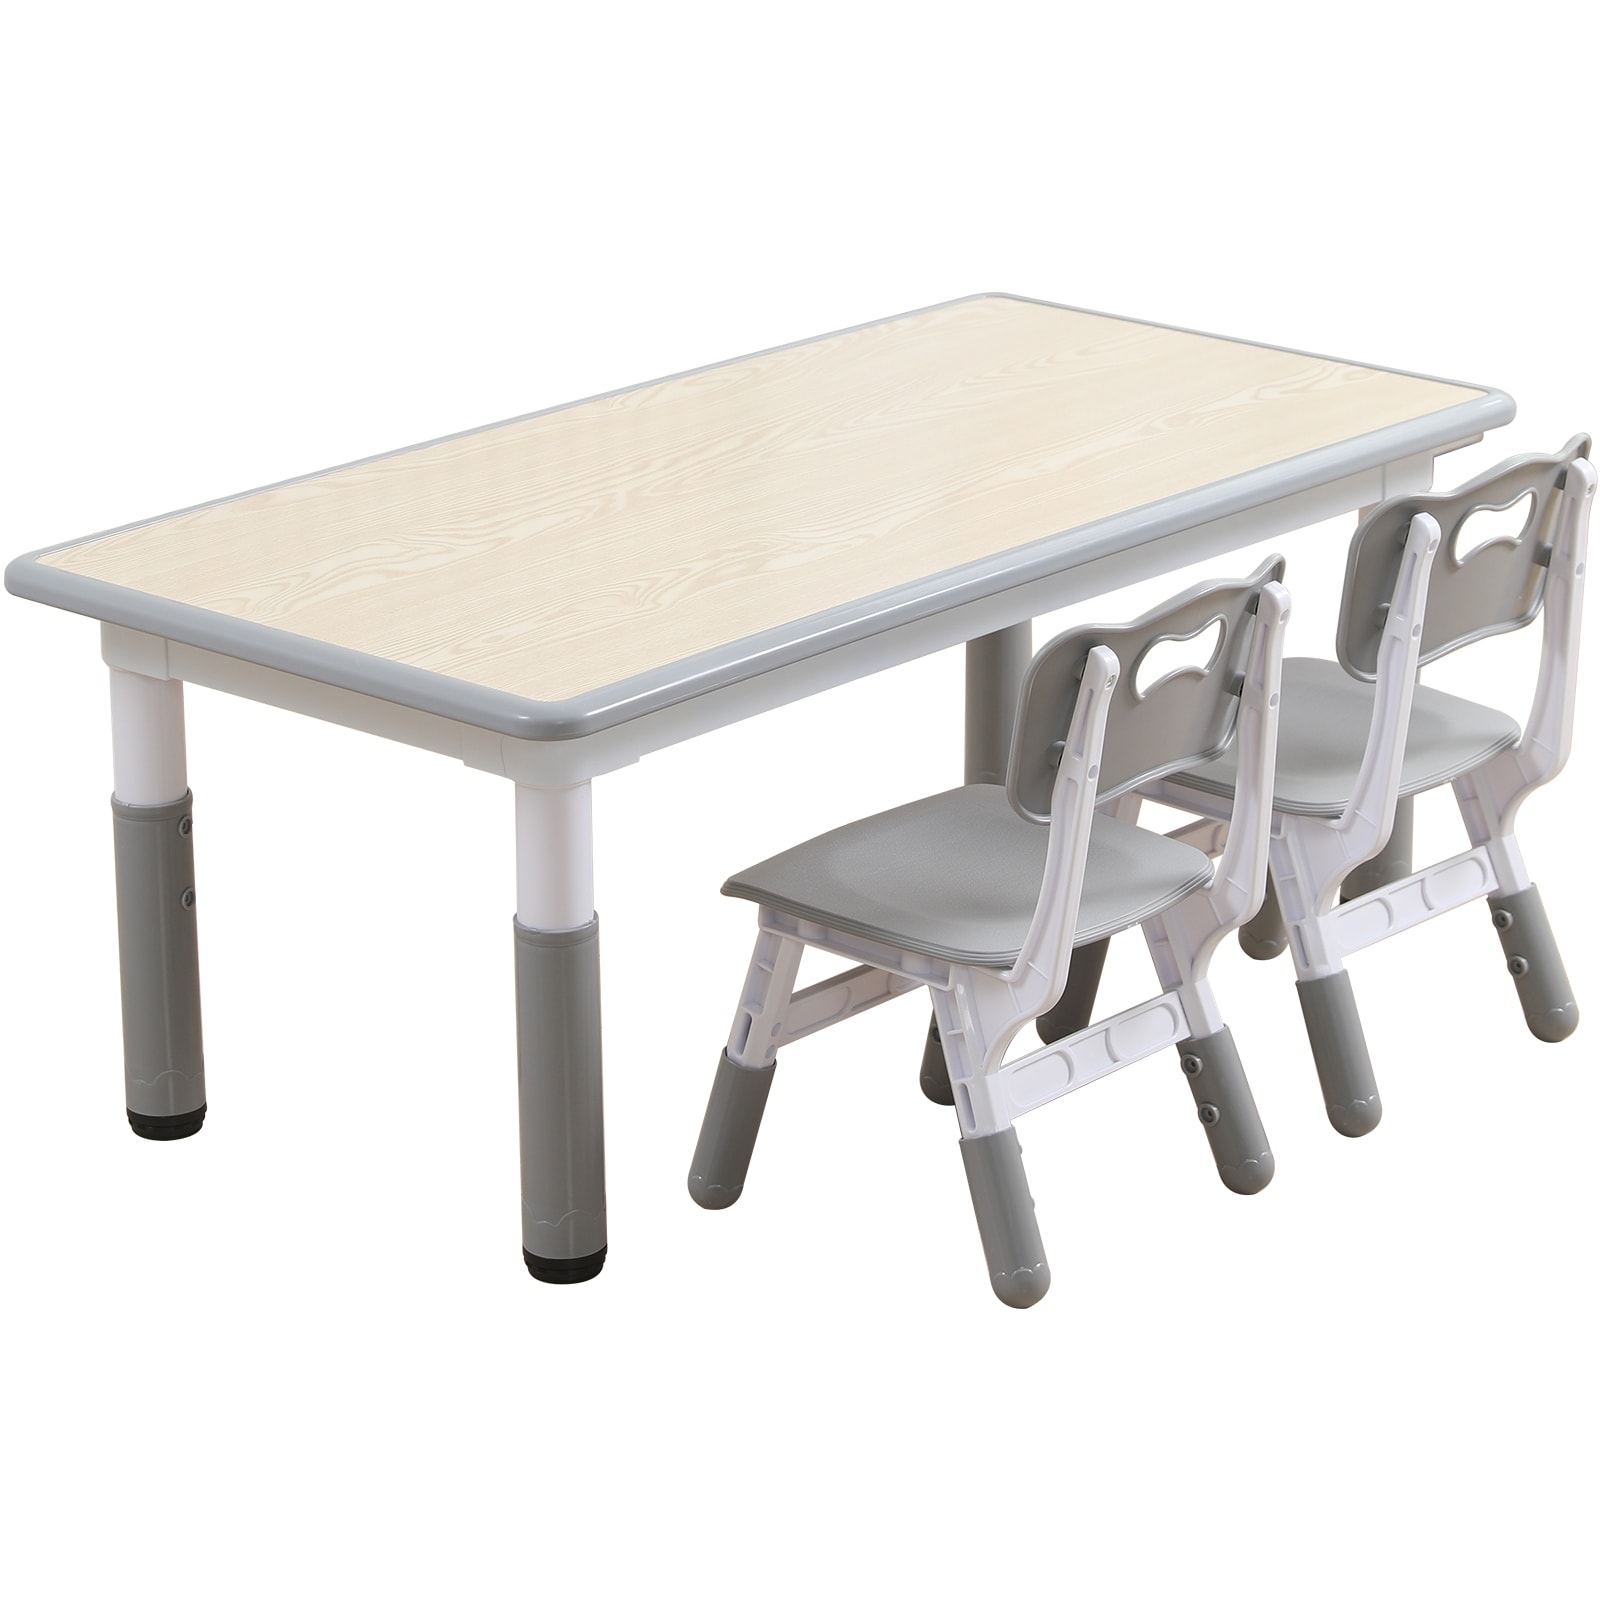 YUKOOL Kids Study Table and Chairs Set - Adjustable Height and Stylish Design